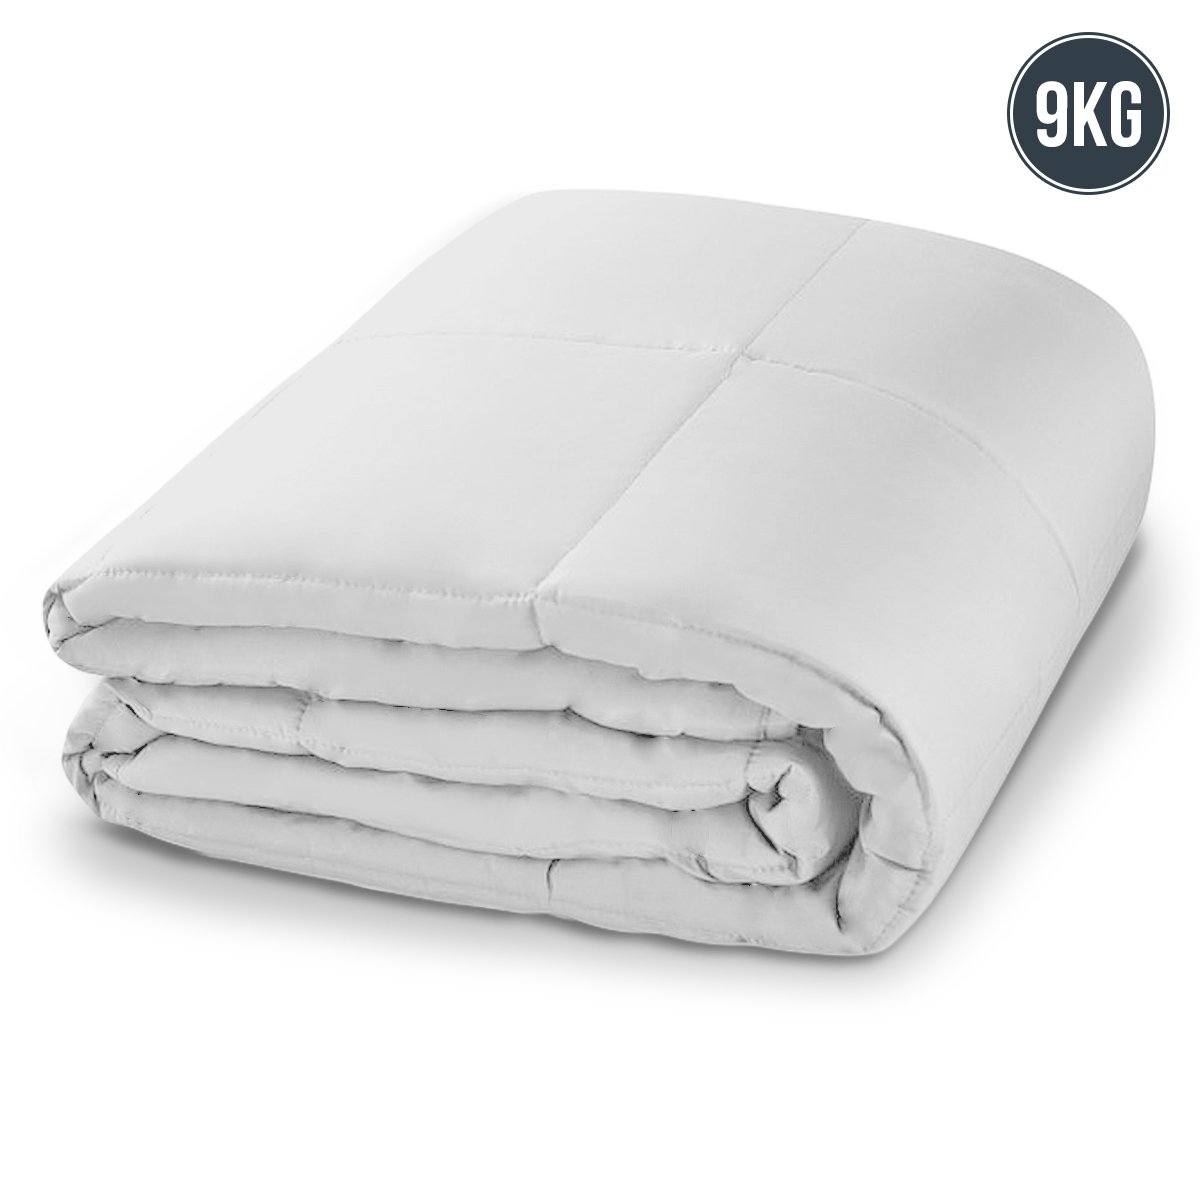 Laura Hill Weighted Blanket Heavy Quilt Doona Queen 9Kg -White 2